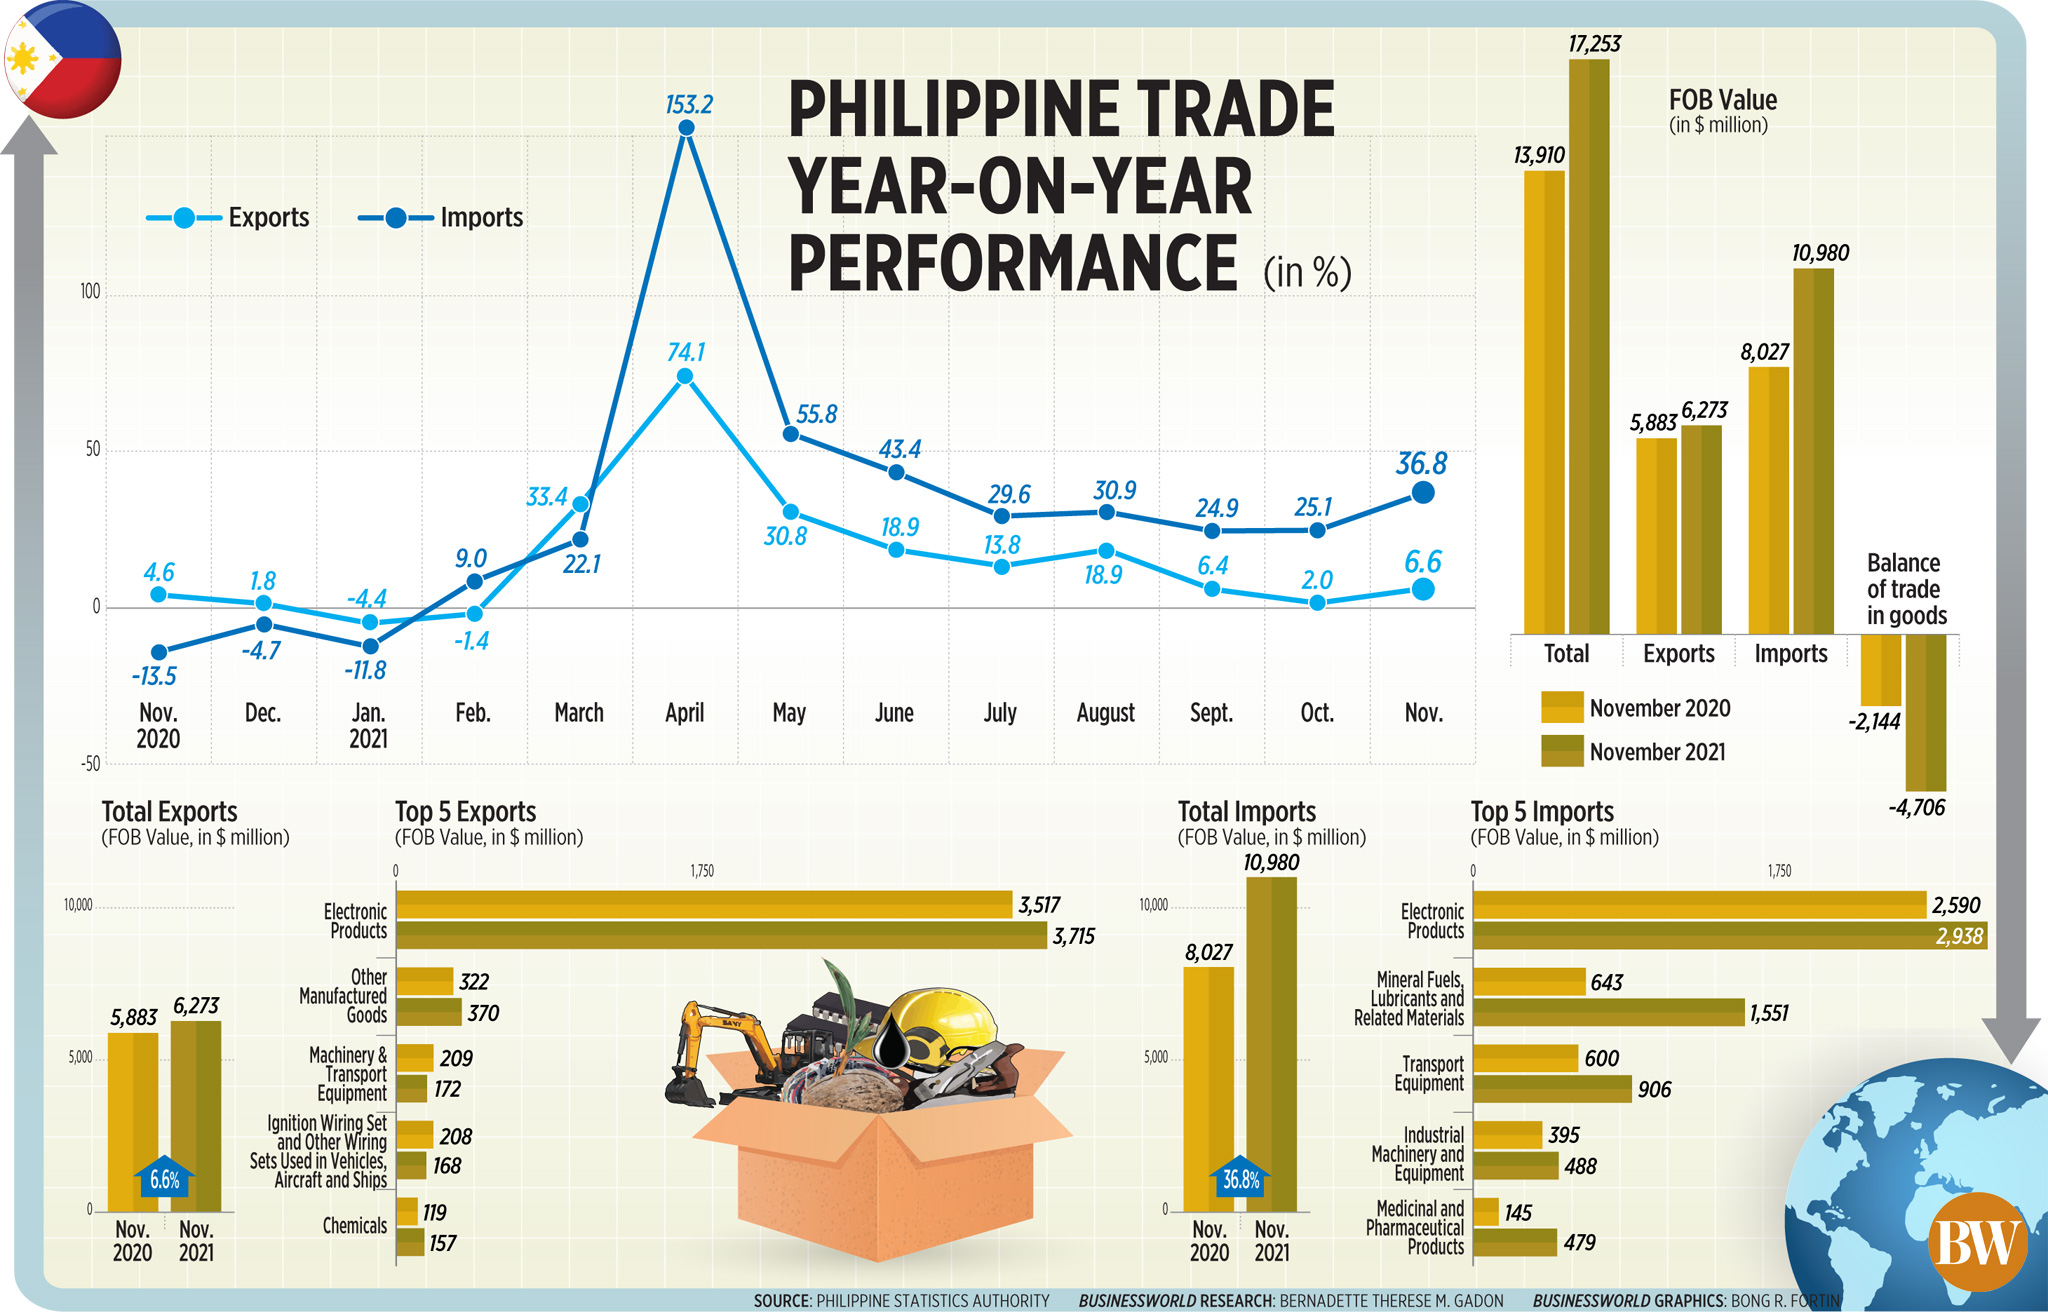 Philippine trade year-on-year performance (Nov. 2021)